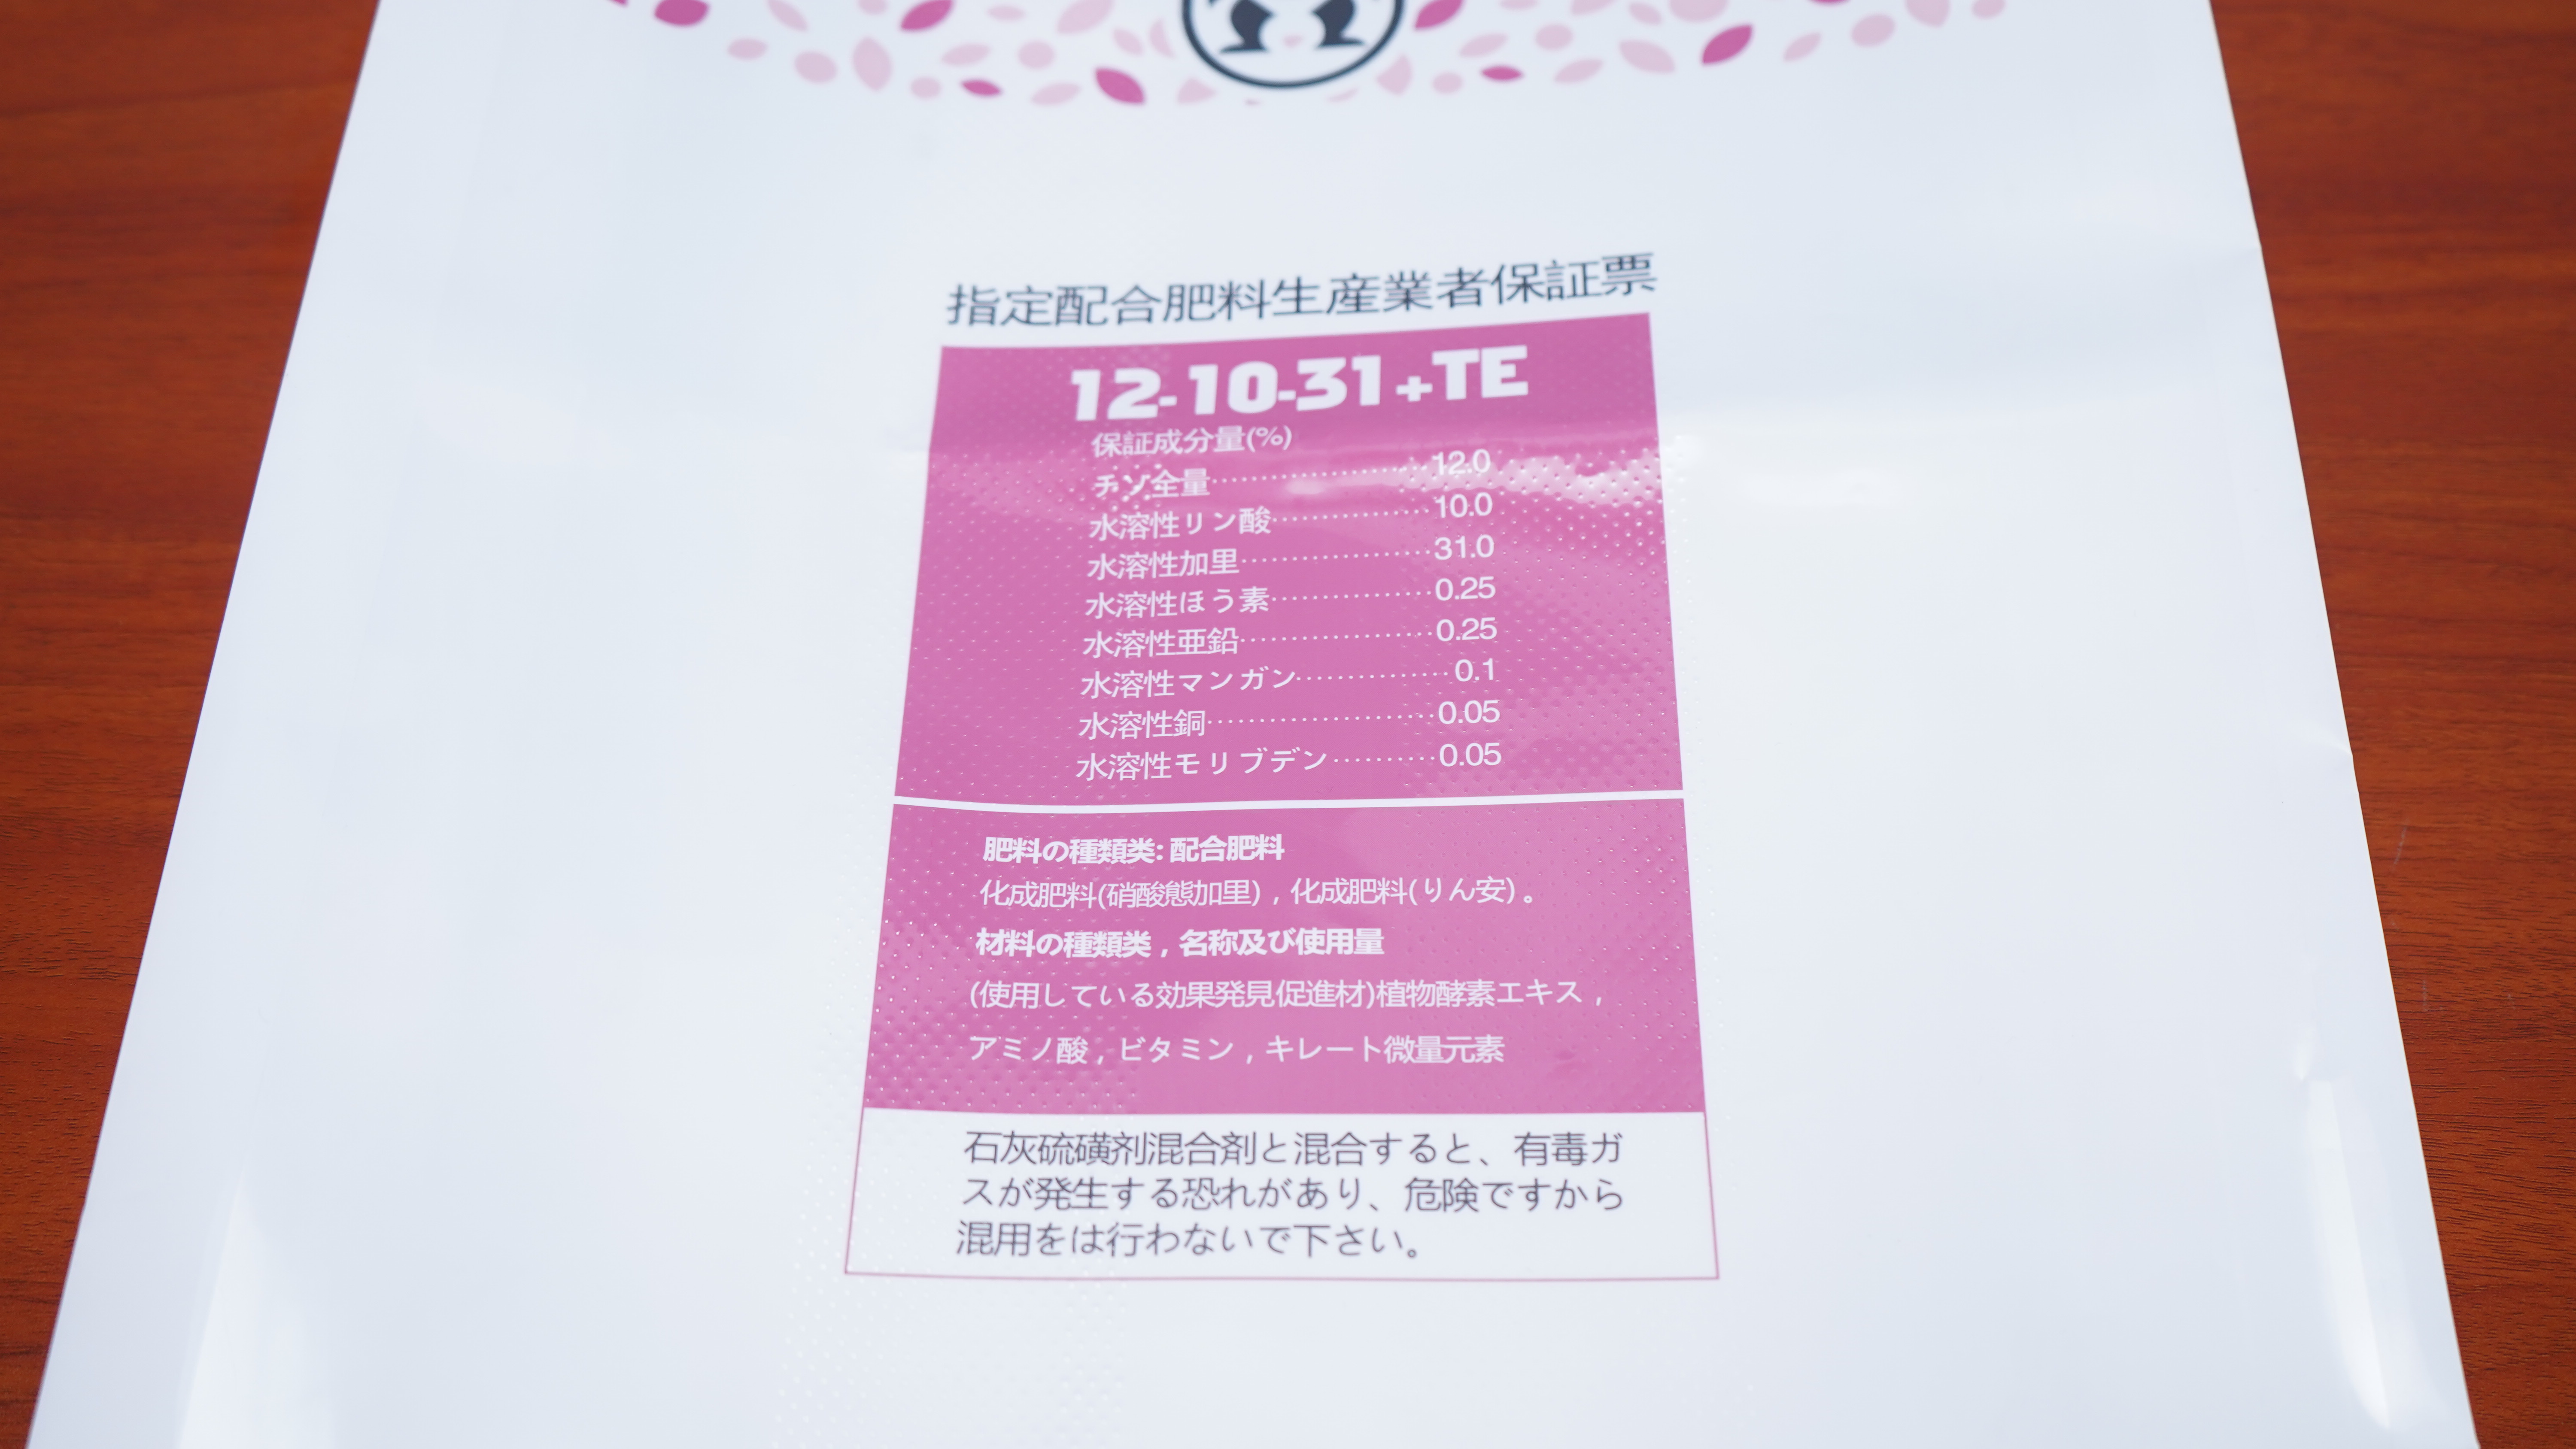 v4-upload.goalsites.com/760/image_1655257130_ صادرات به ژاپن - PE فیلم سنگین یکپارچه قالب بندی کیسه های بسته بندی مواد غذایی - کیسه های مواد غذایی حیوان خانگی - مواد اولیه شیمیایی - کیسه های کود - (7) .JPG